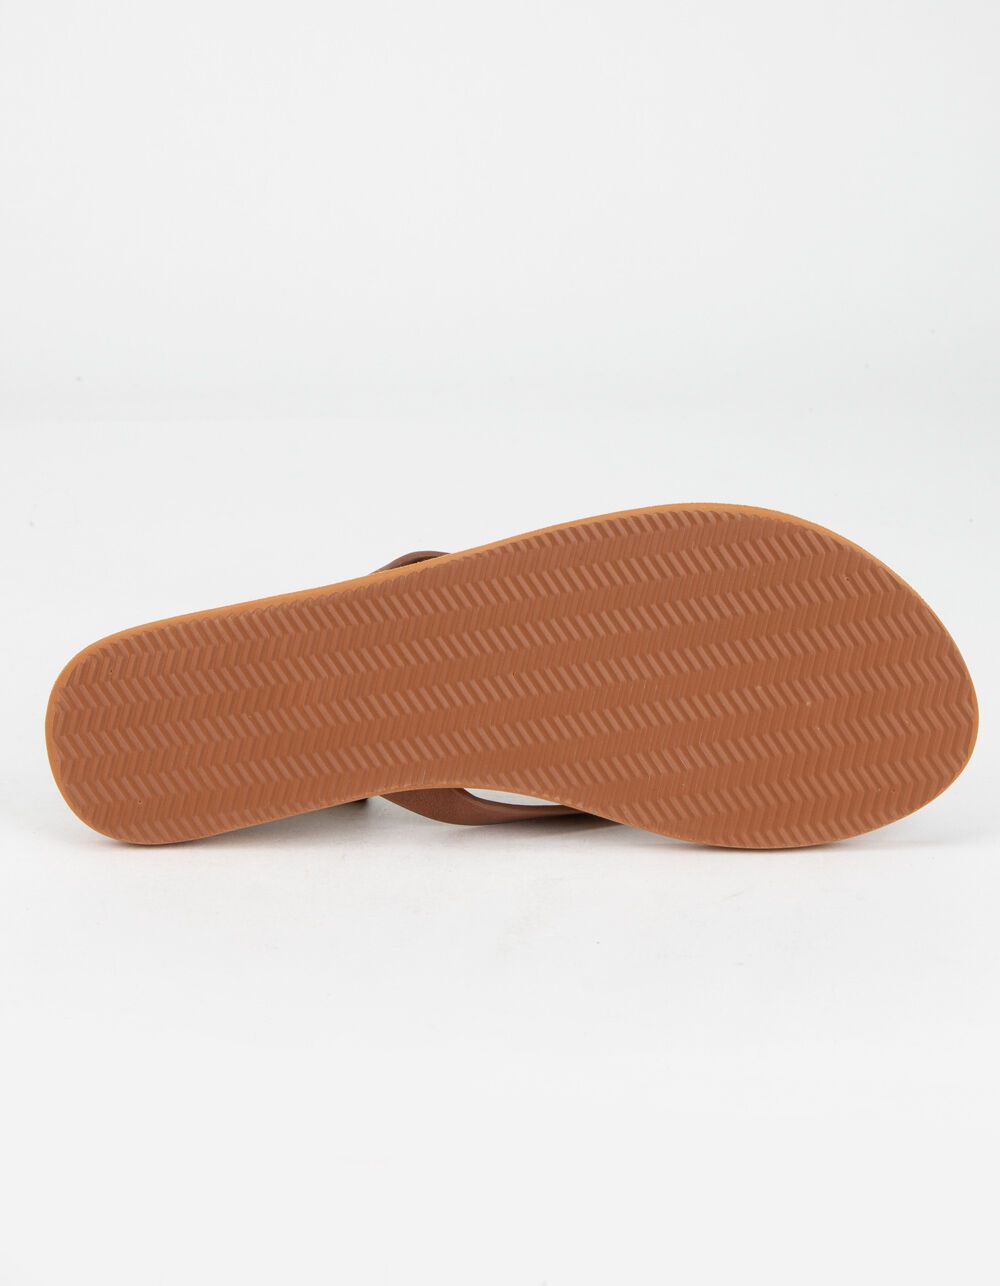 GIGI Teasure Womens Sandals - TAN | Tillys